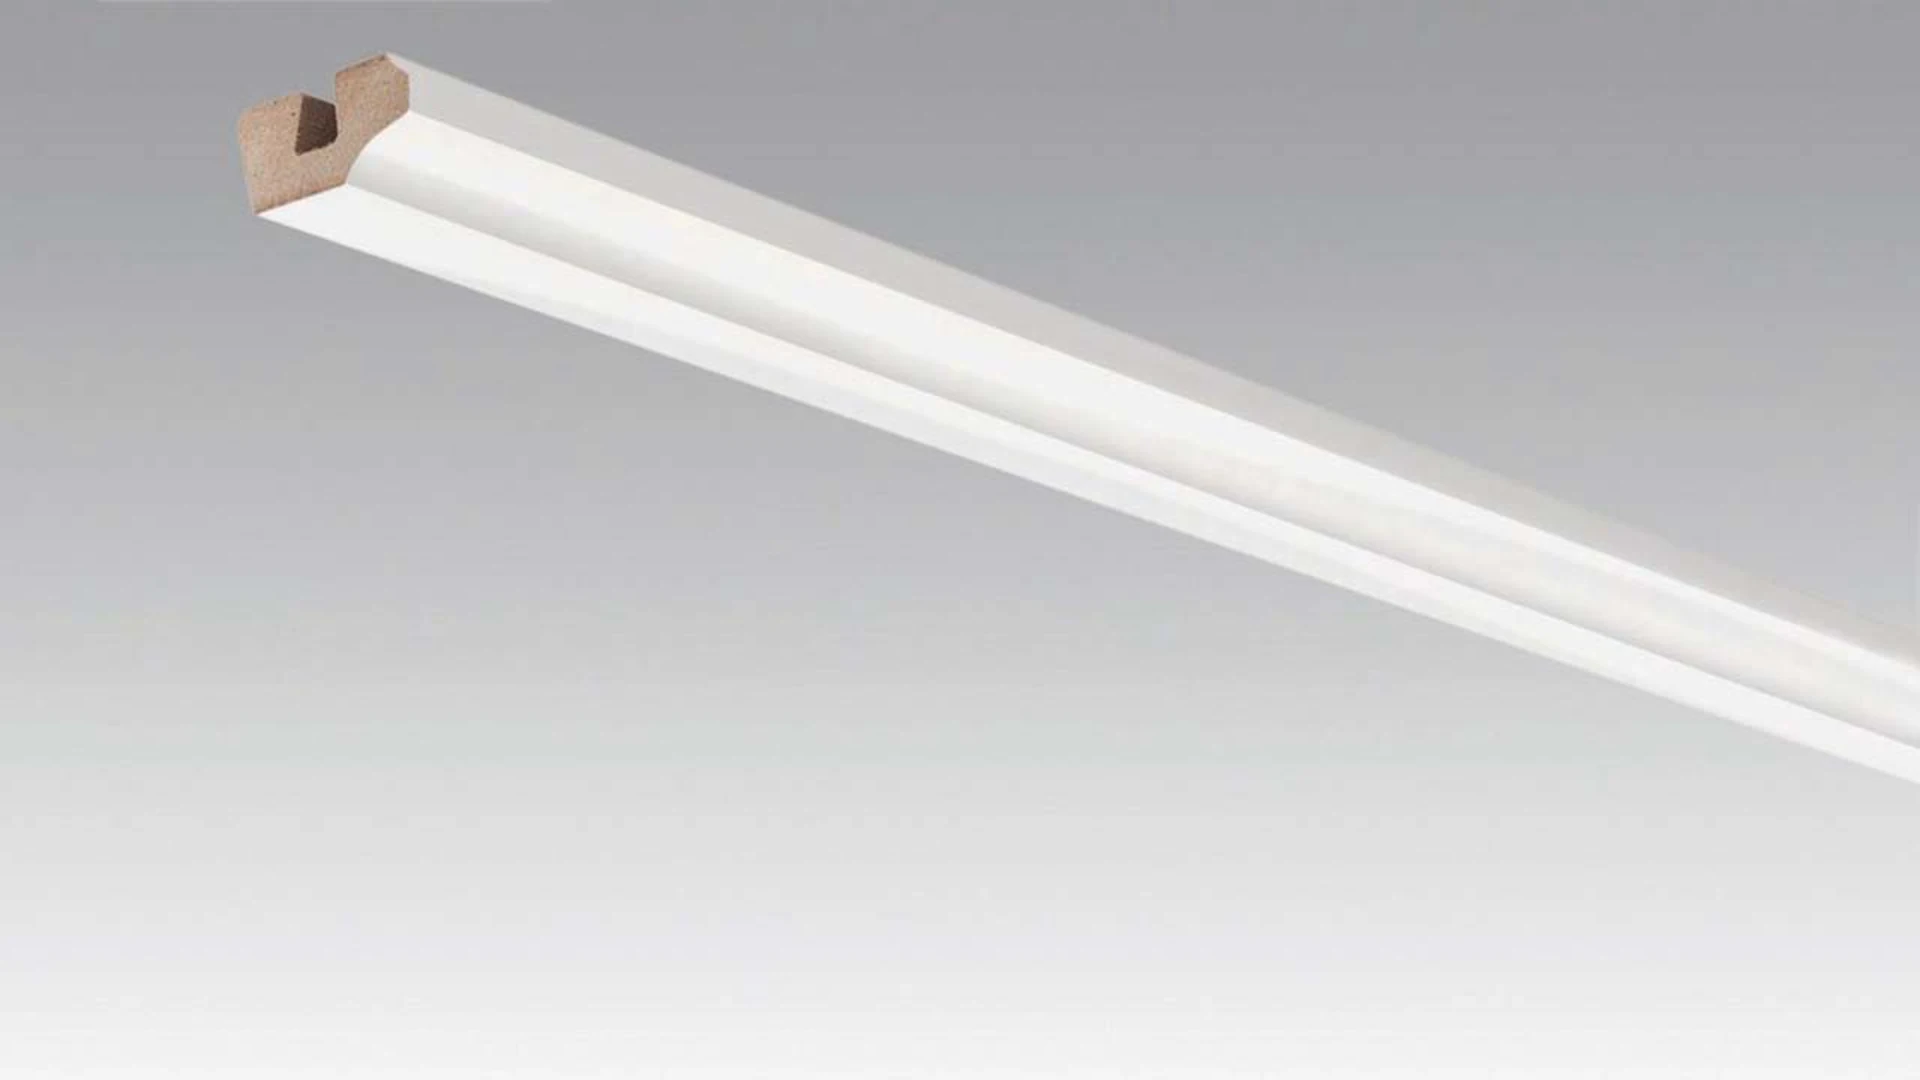 MEISTER Ceiling trim White Vision 4203 - 2380 x 38 x 19 mm (200031-2380-04203)